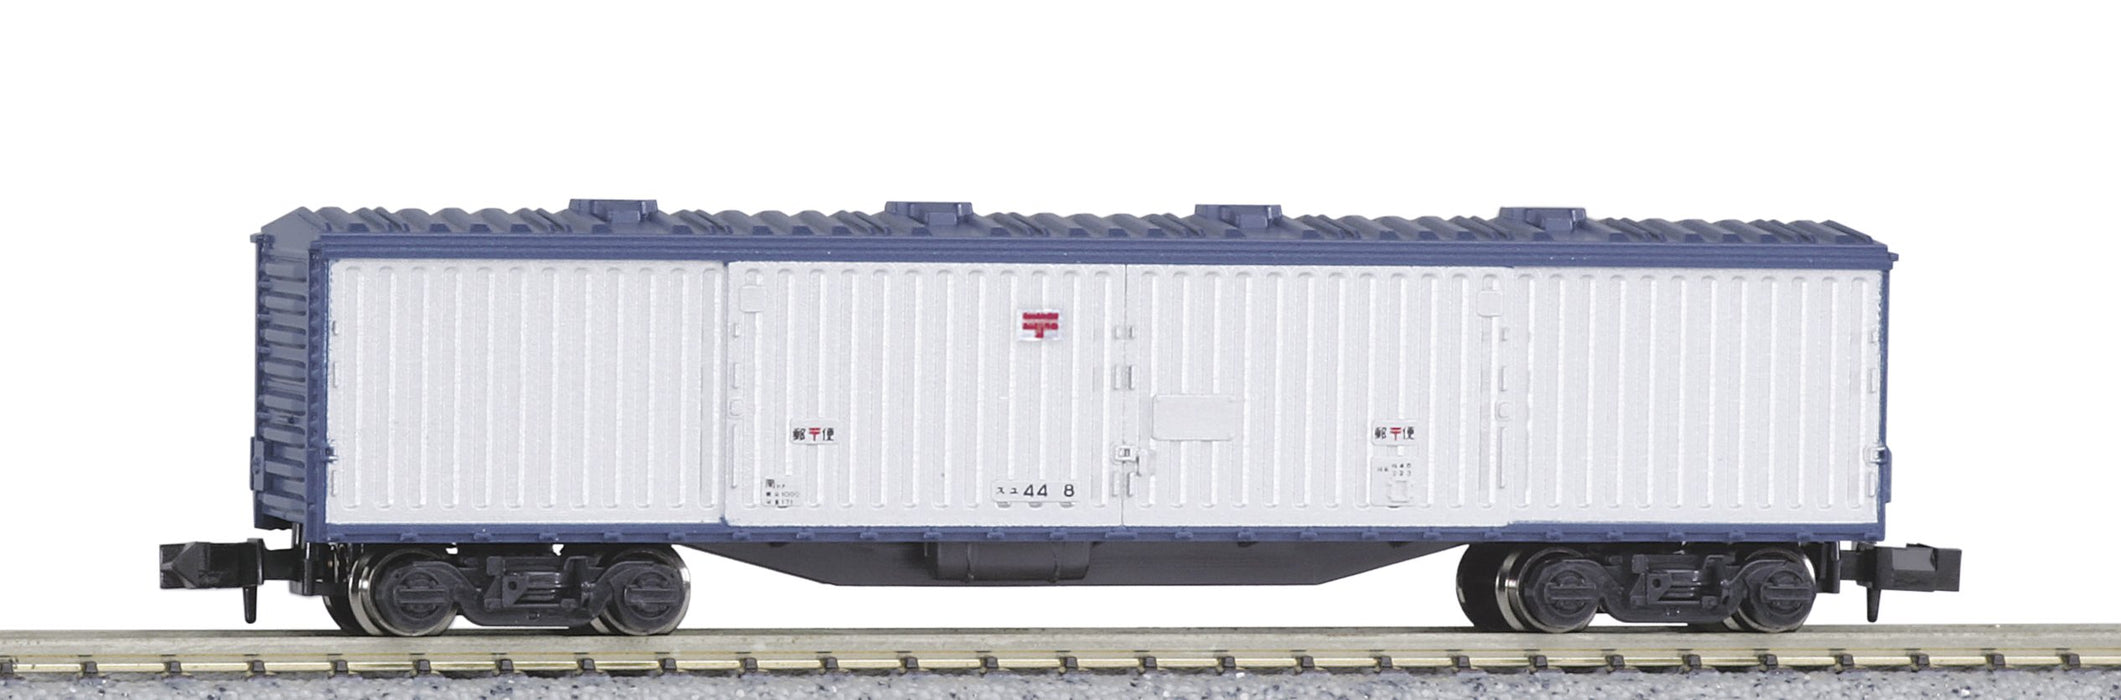 Kato N Gauge Suyu44 8026 Freight Car – Advanced Railway Model